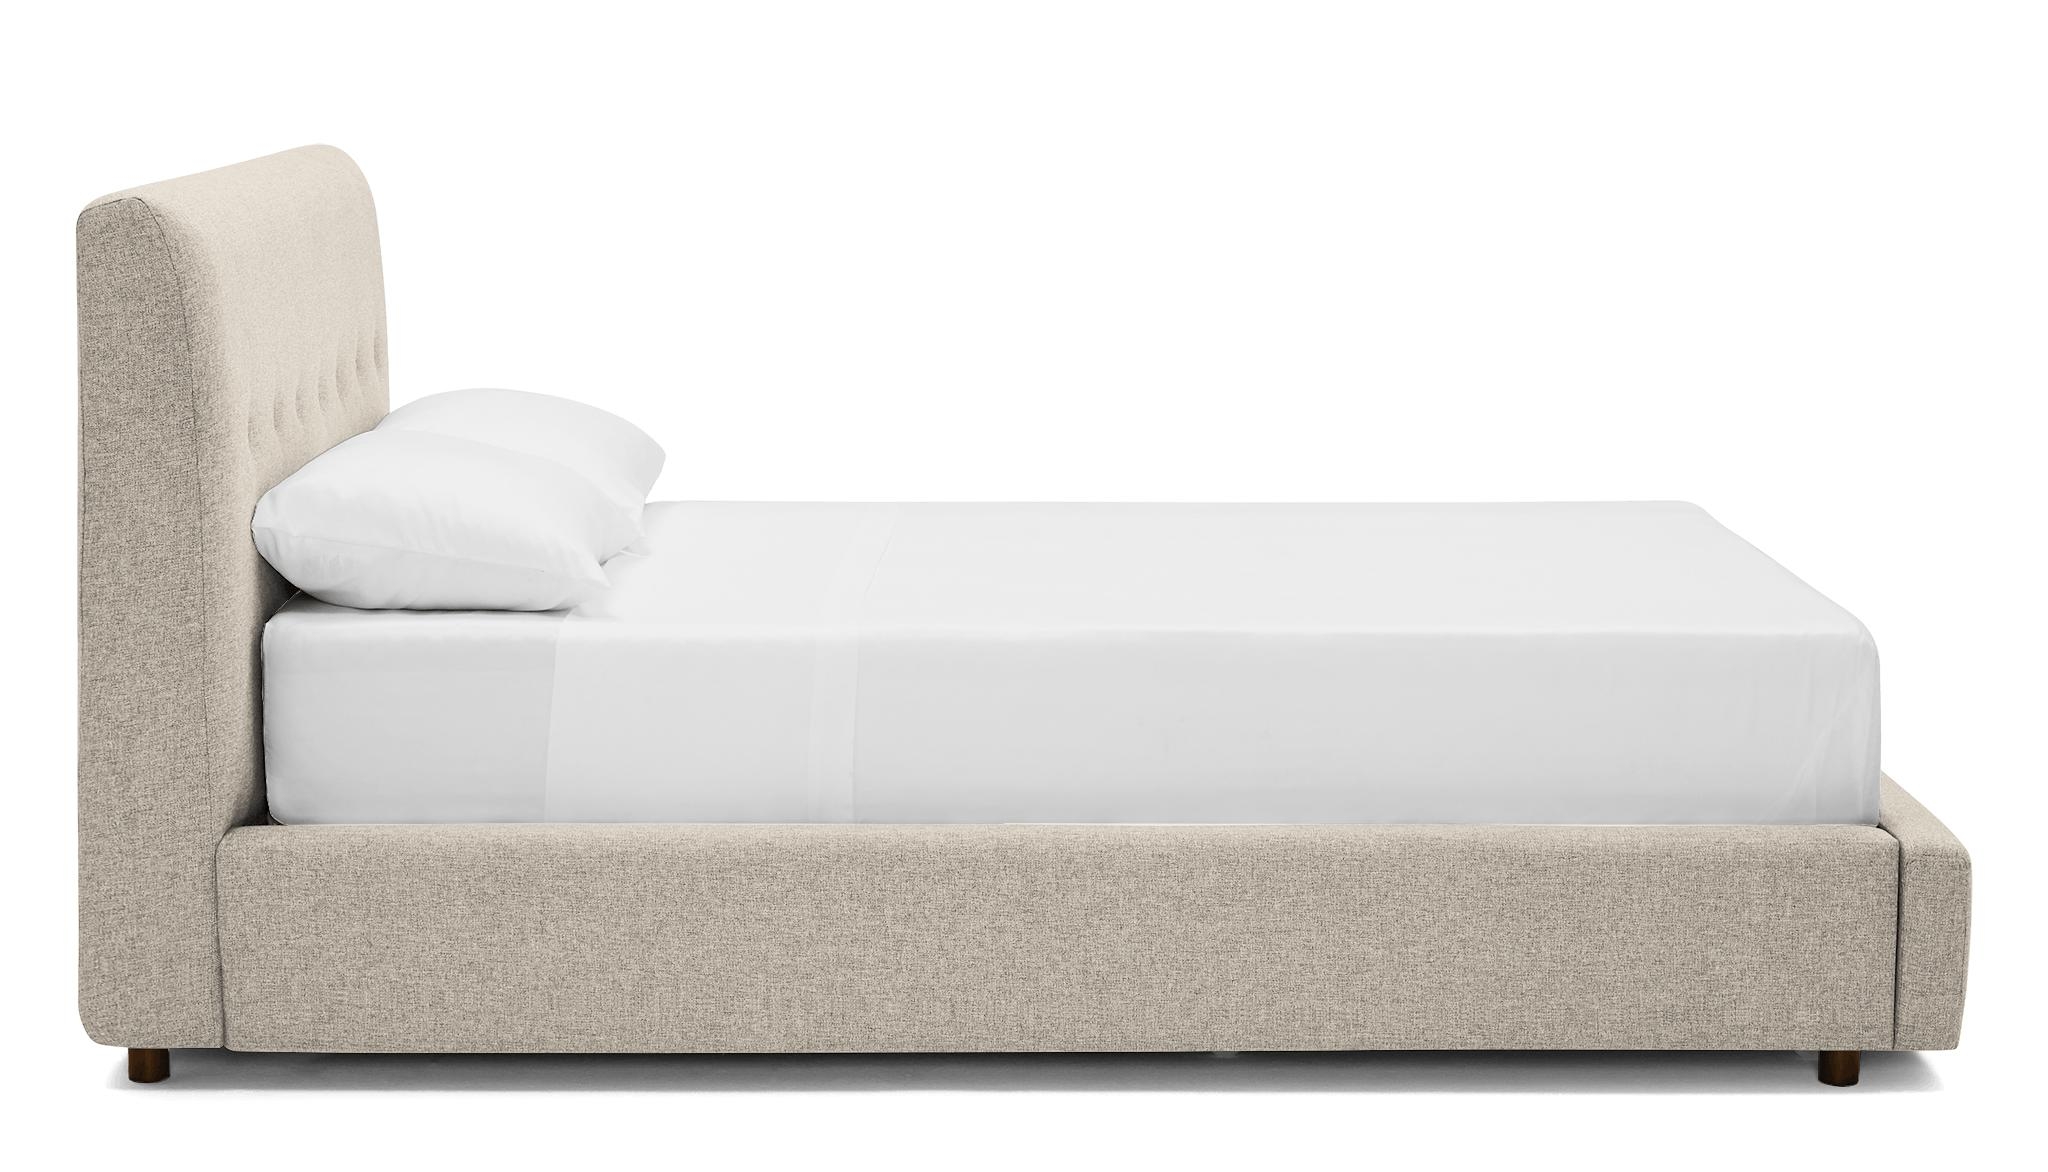 Beige/White Alvin Mid Century Modern Storage Bed - Cody Sandstone - Mocha - Cal King - Image 2